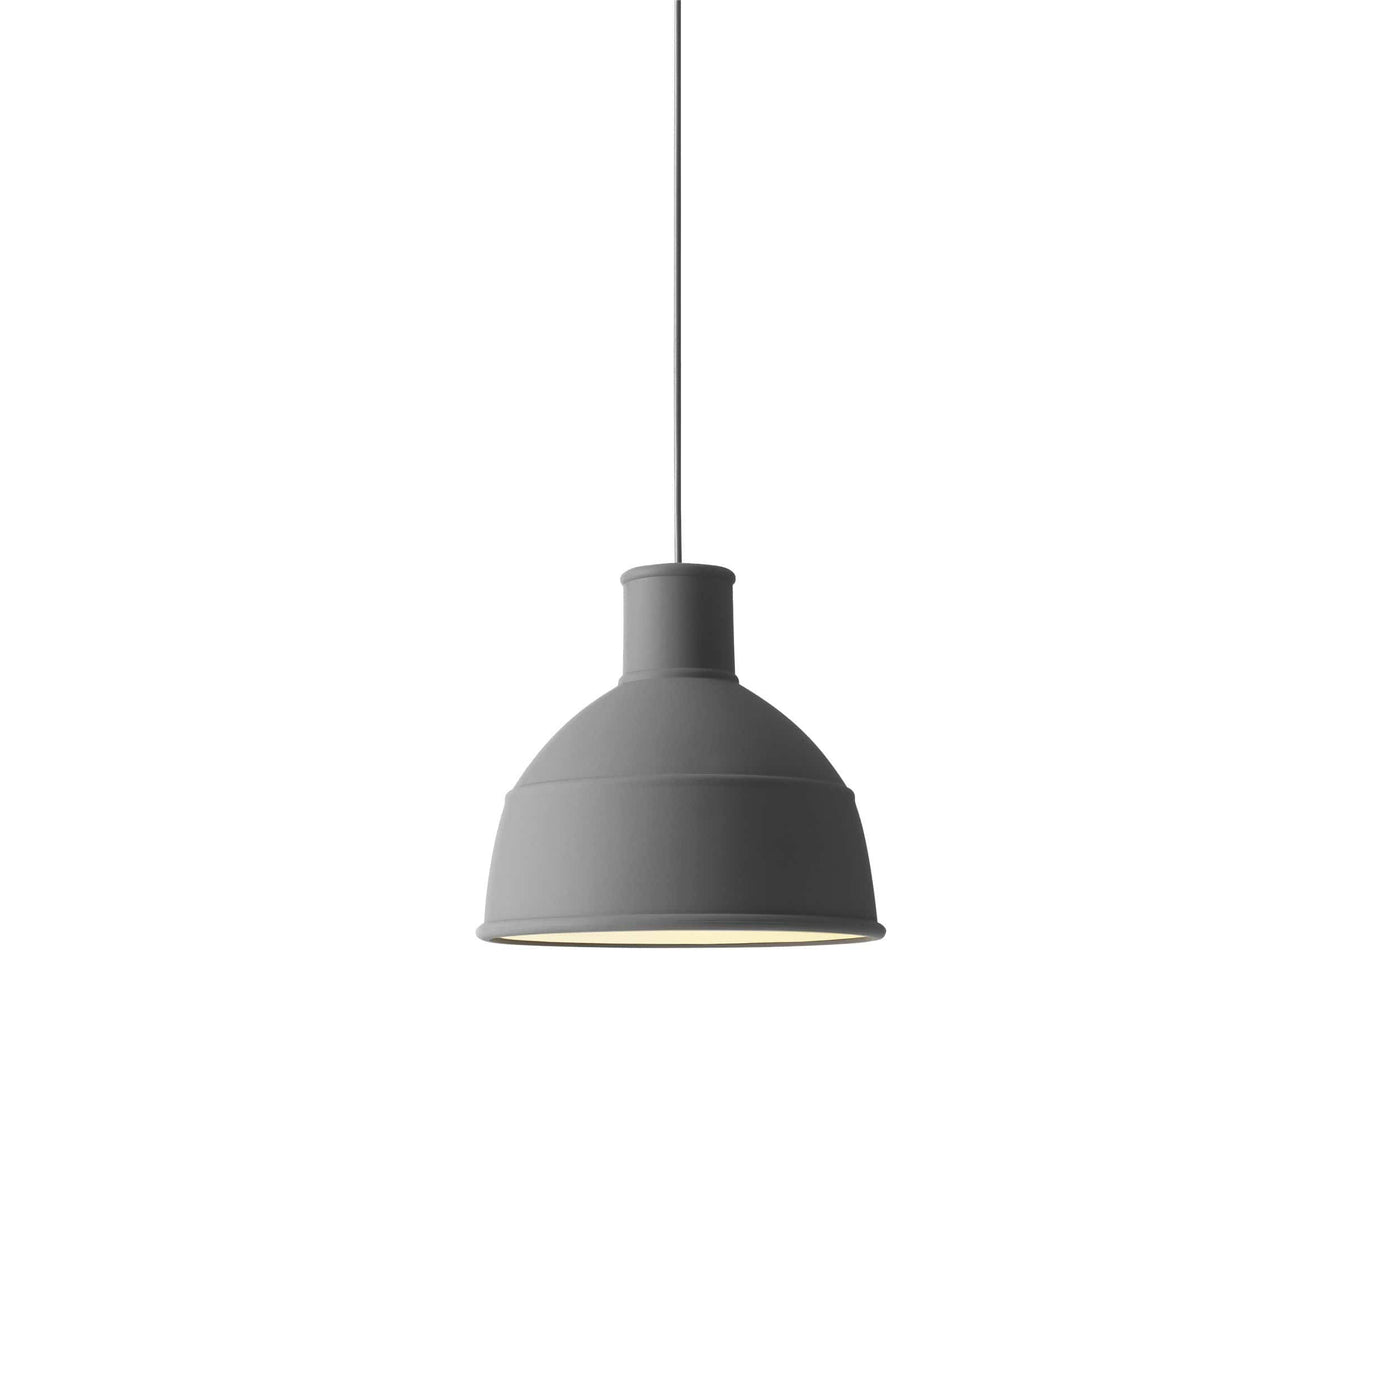 muuto unfold pendant lamp dark grey available at someday designs.